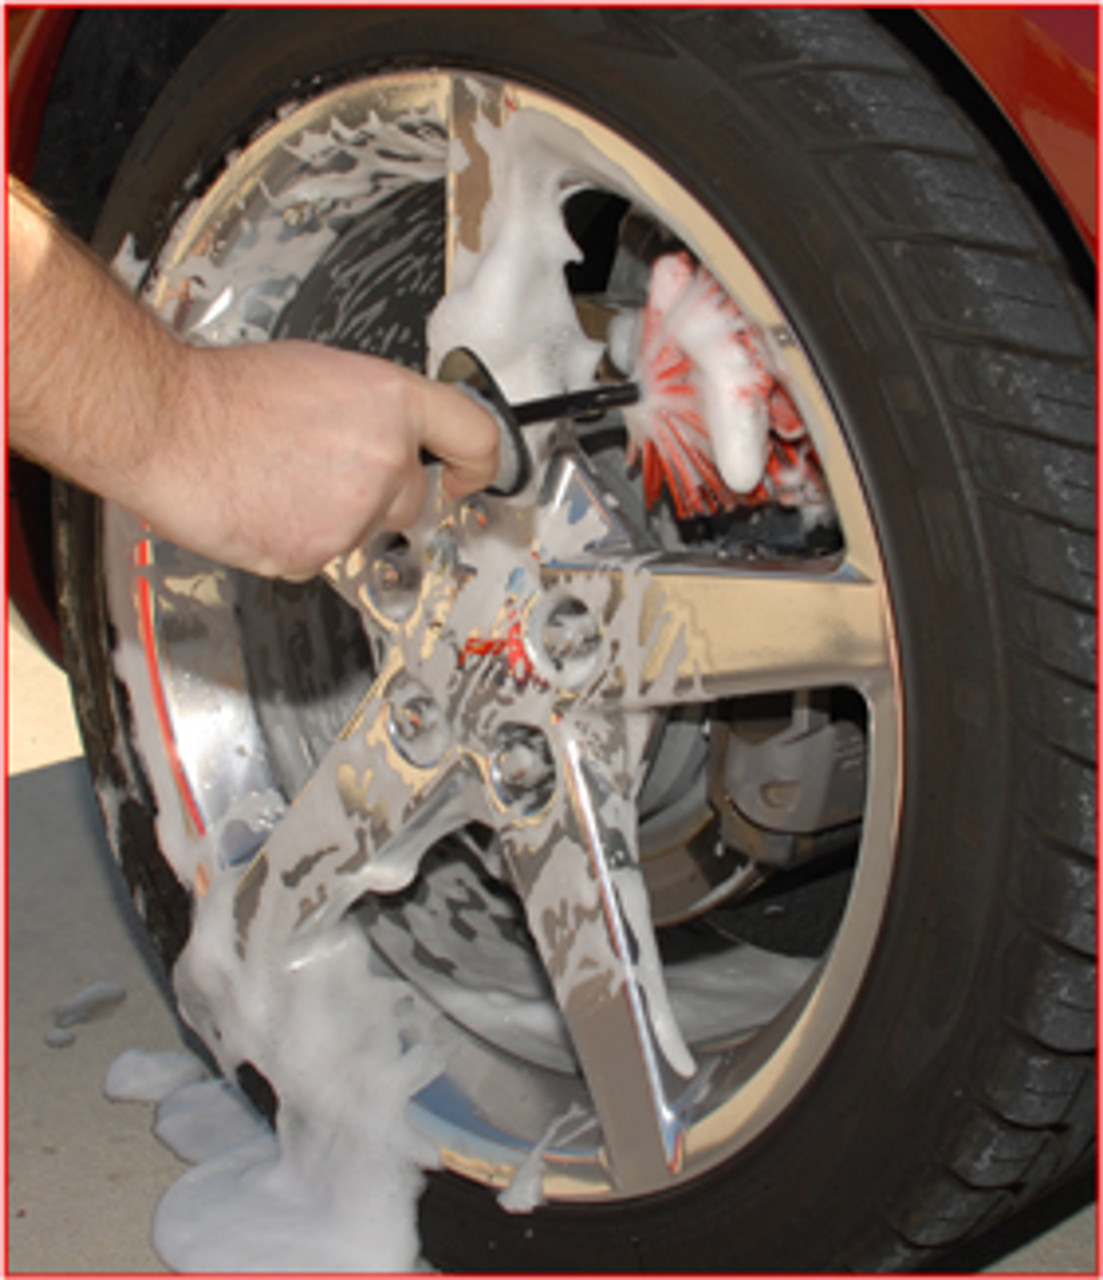 Wheel and Rim Brush - Durable, Non-abrasive, Long Handle